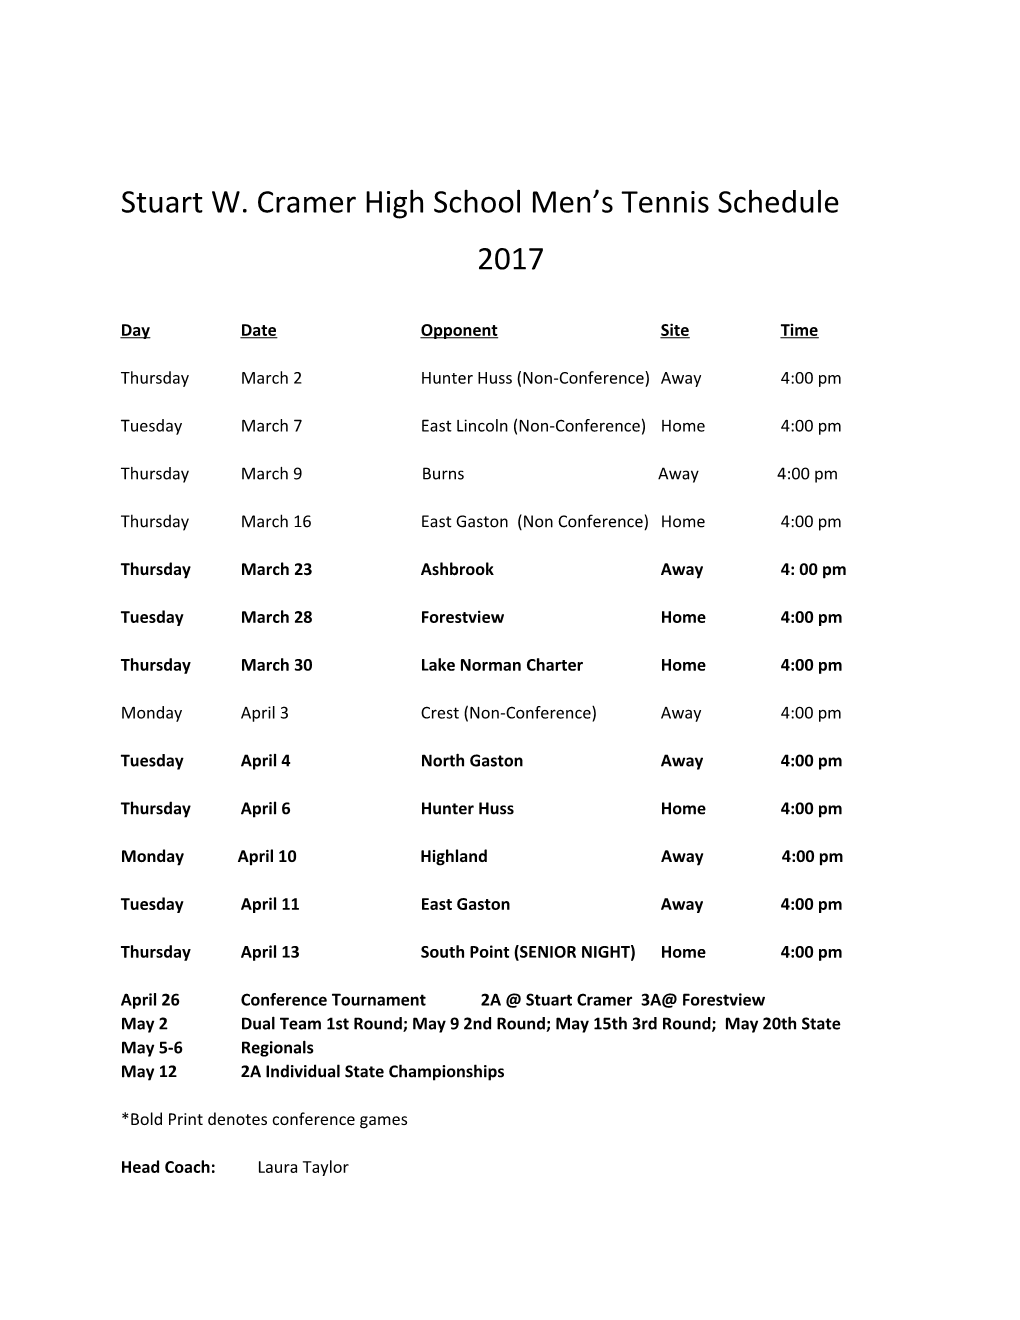 Stuart W. Cramer High School Men S Tennis Schedule